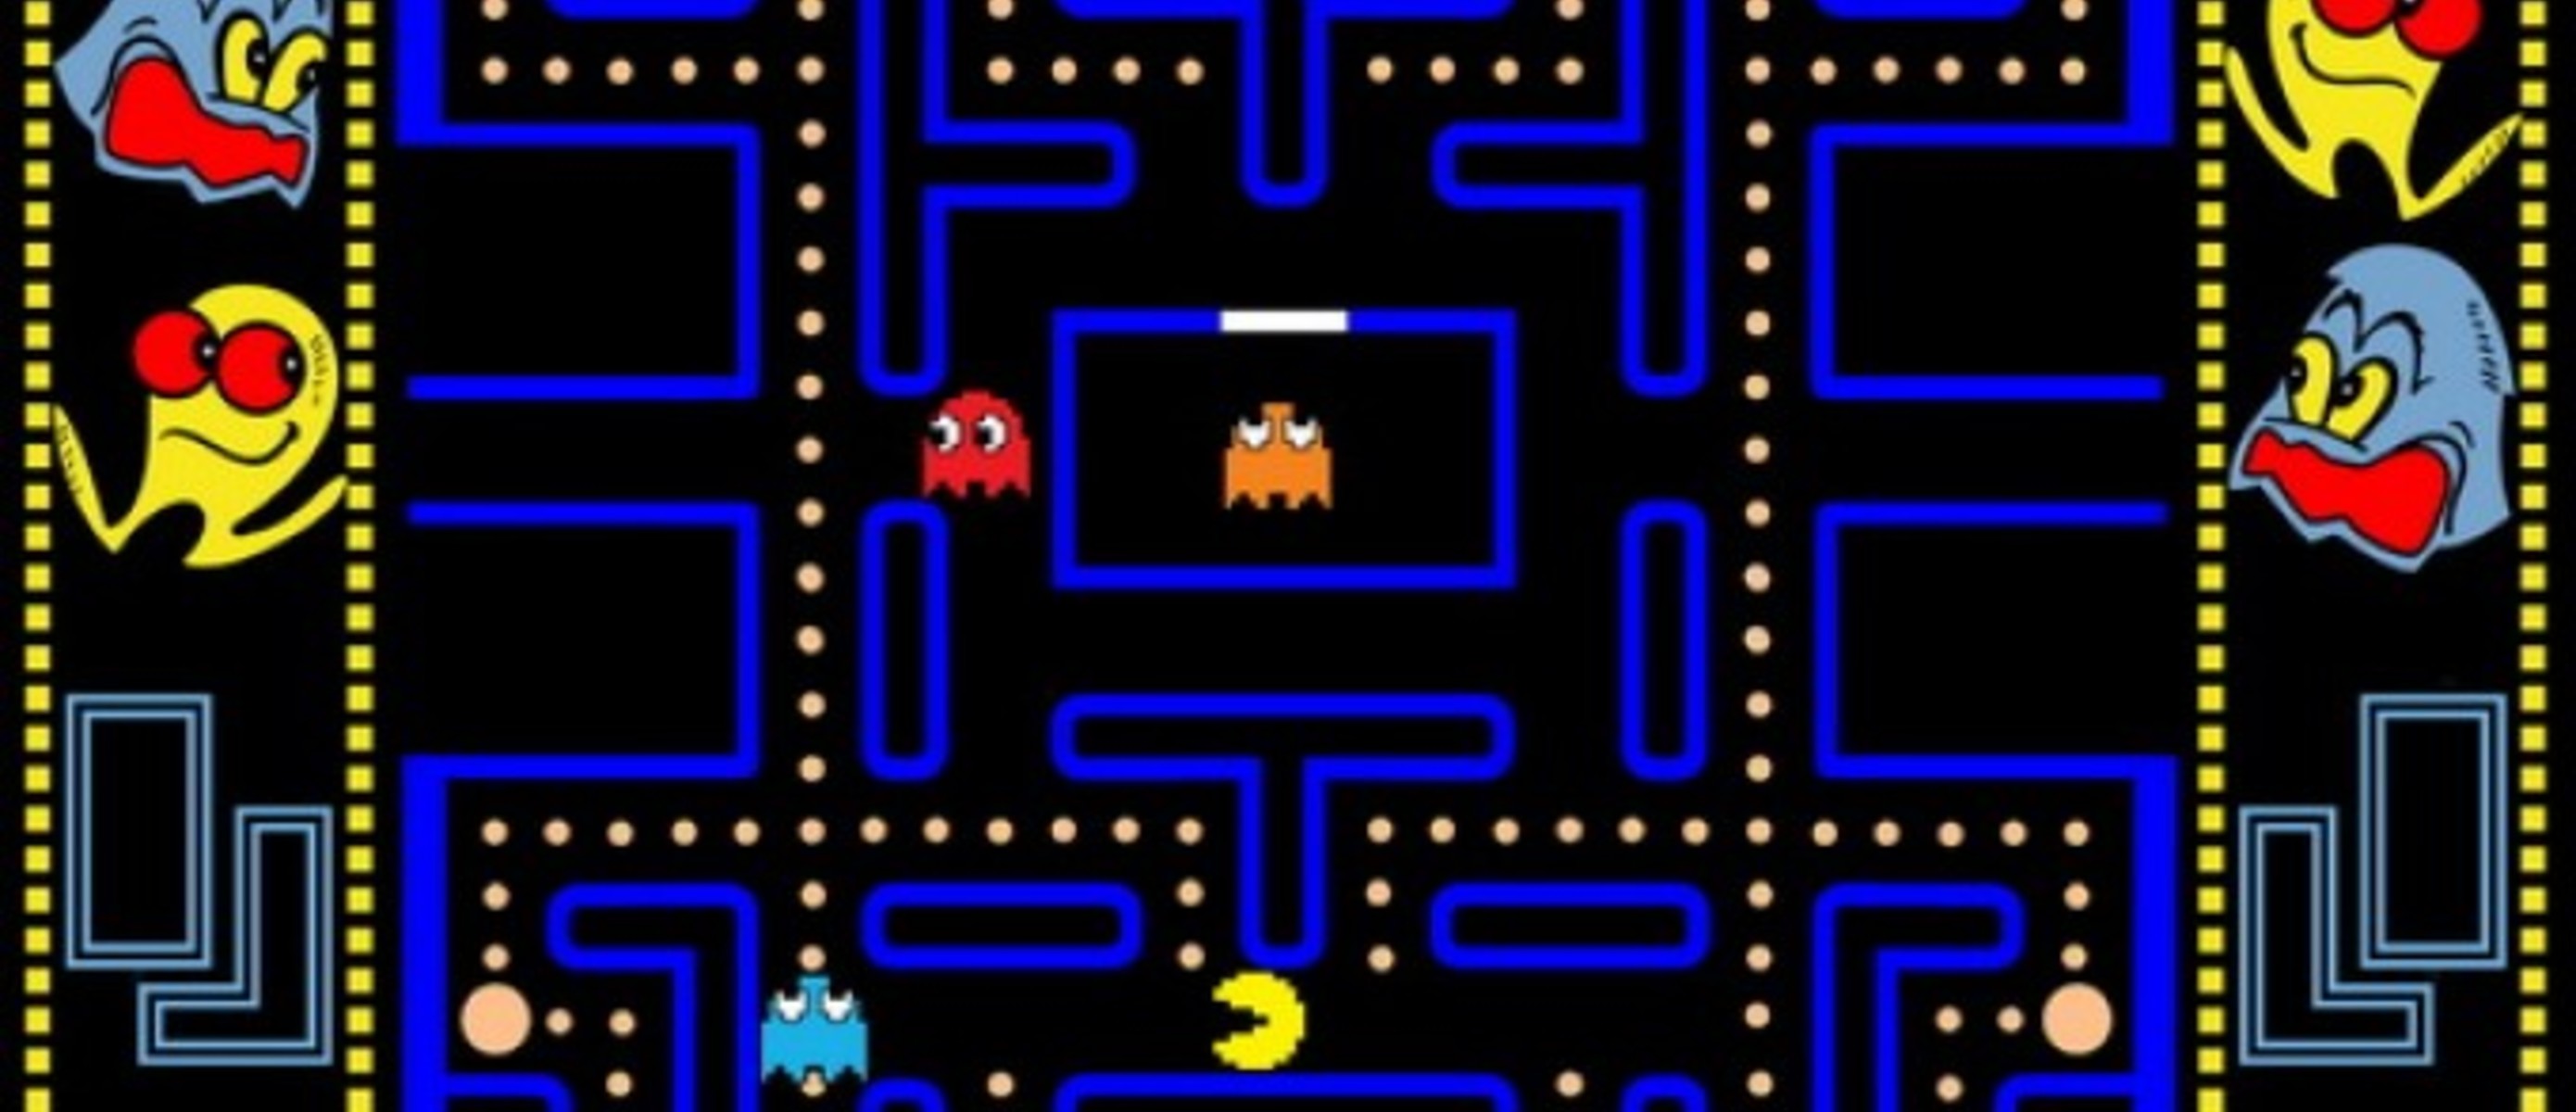 Pac man game. Pacman игра. Pac-man 1980. Pacman первая игра. Pack man игра.